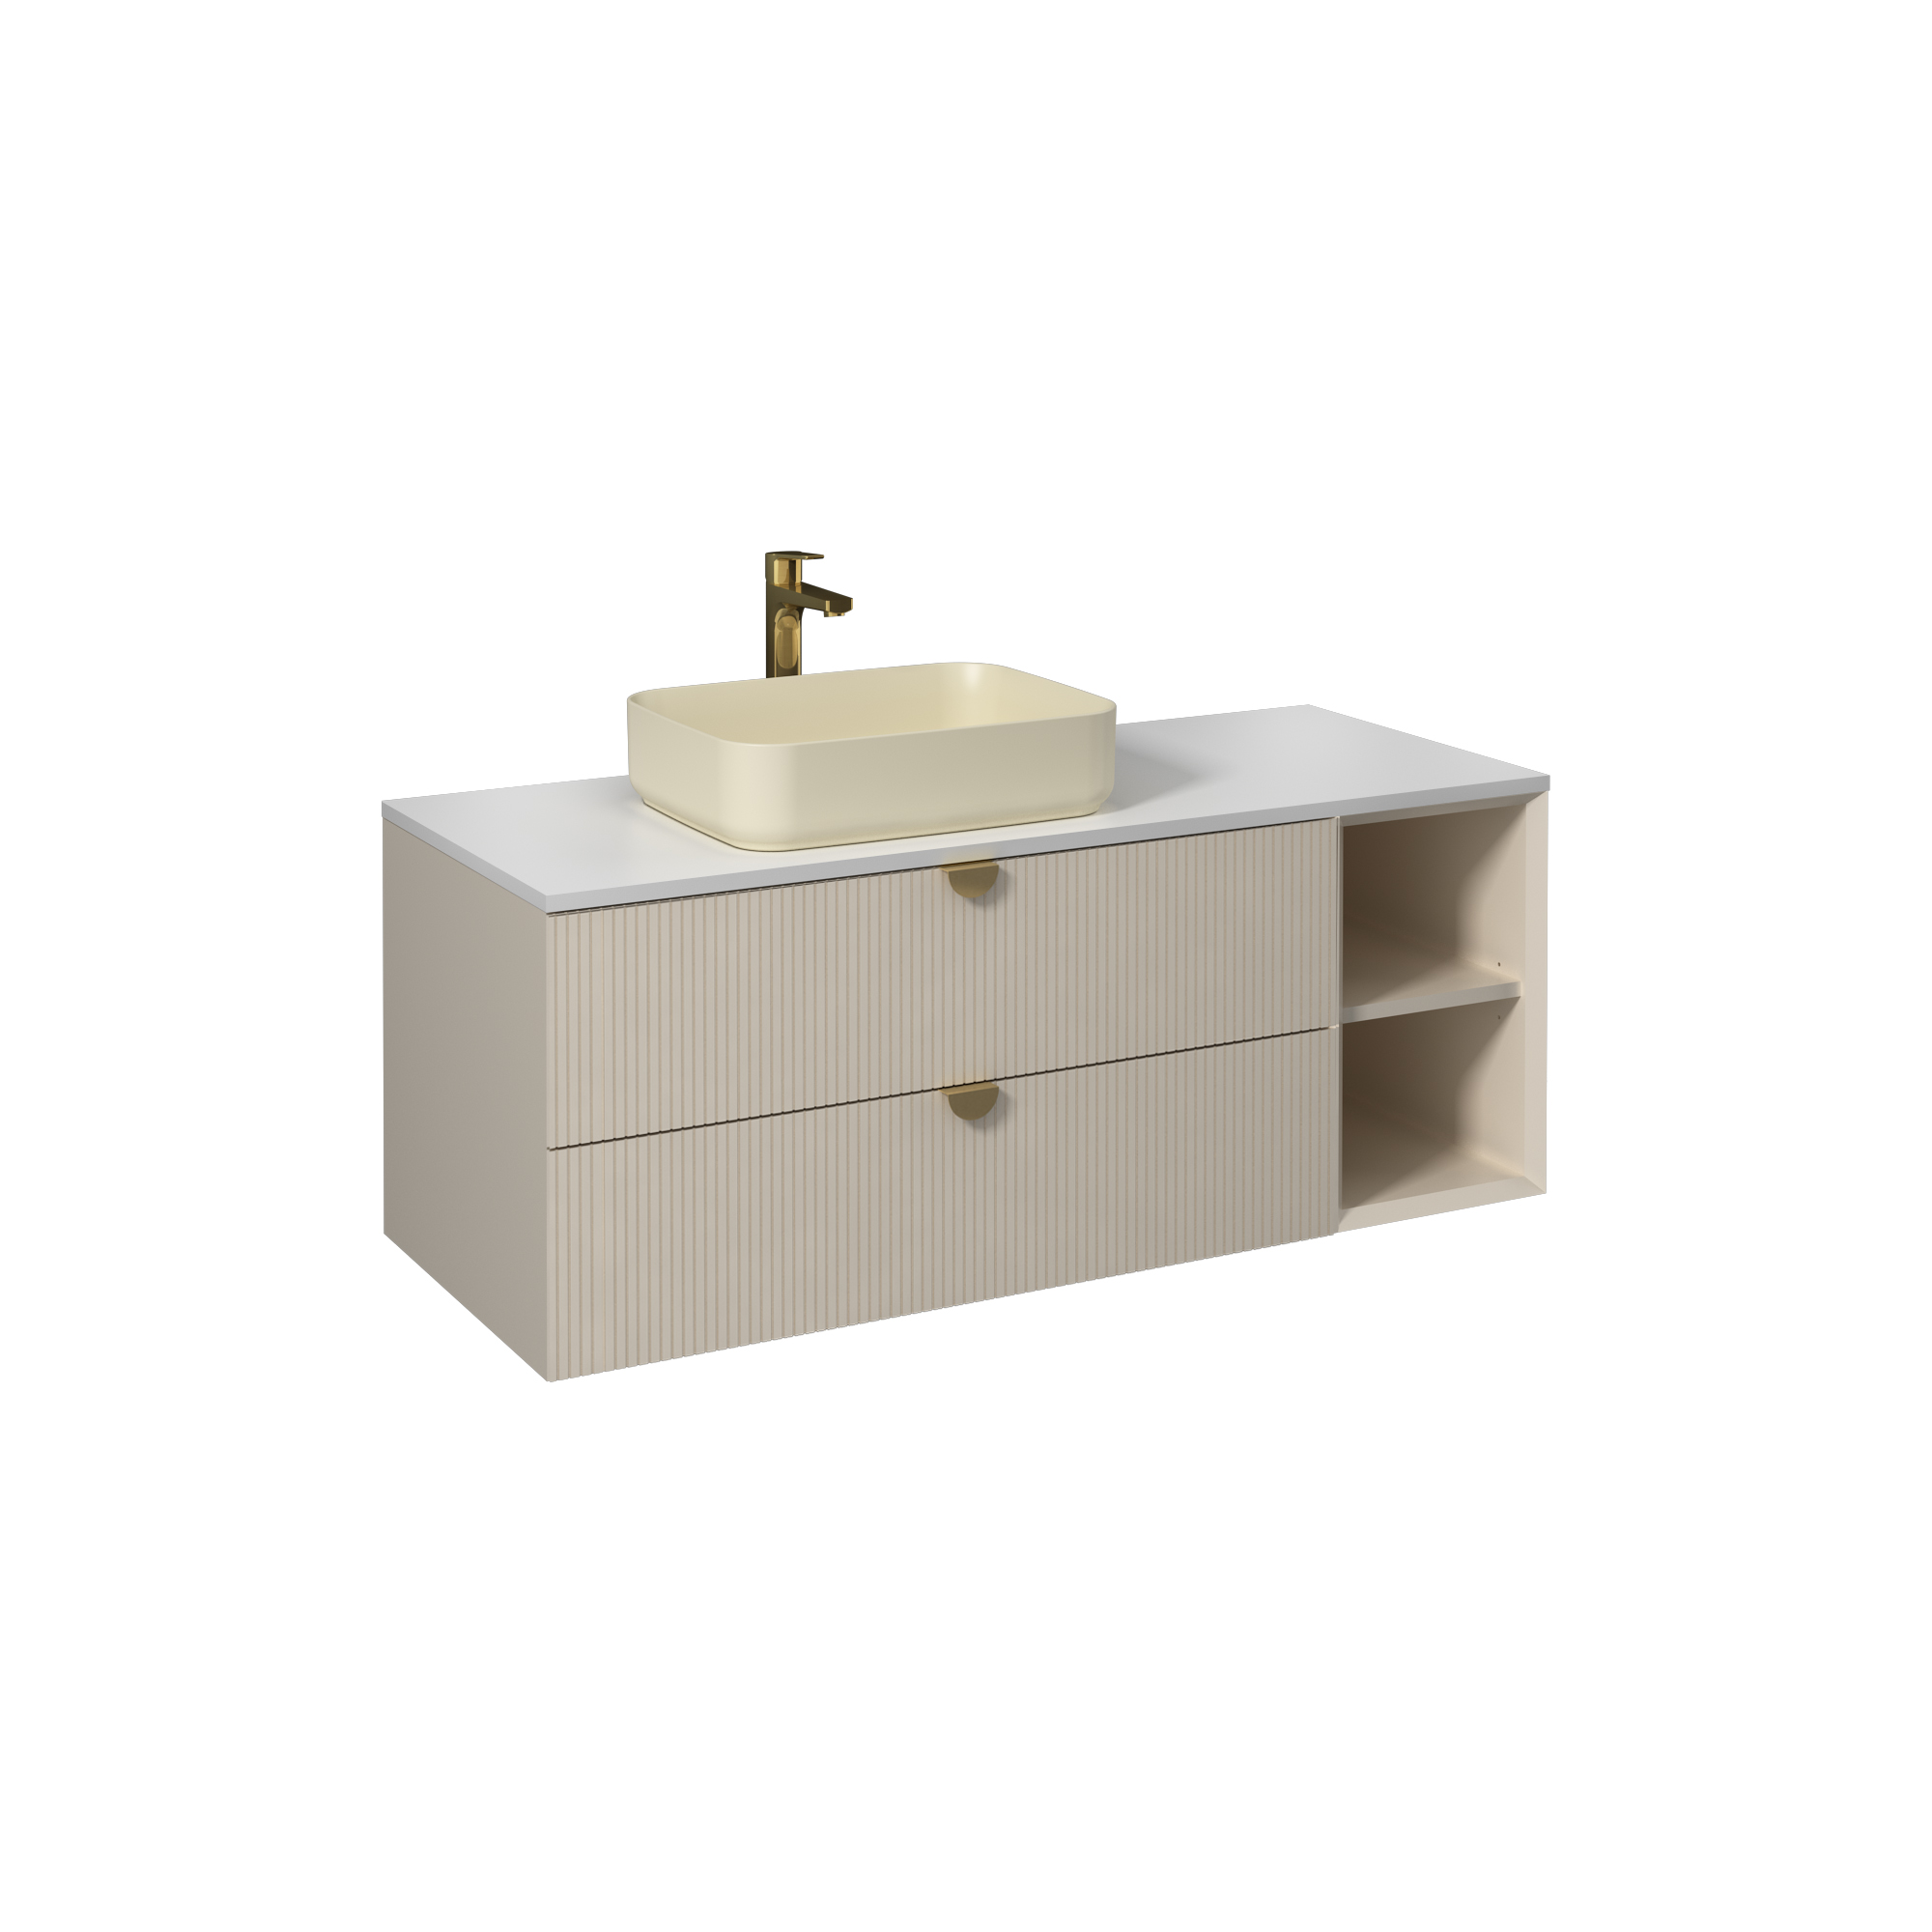 Infinity Washbasin Cabinet Ocean, with White Washbasin 39"